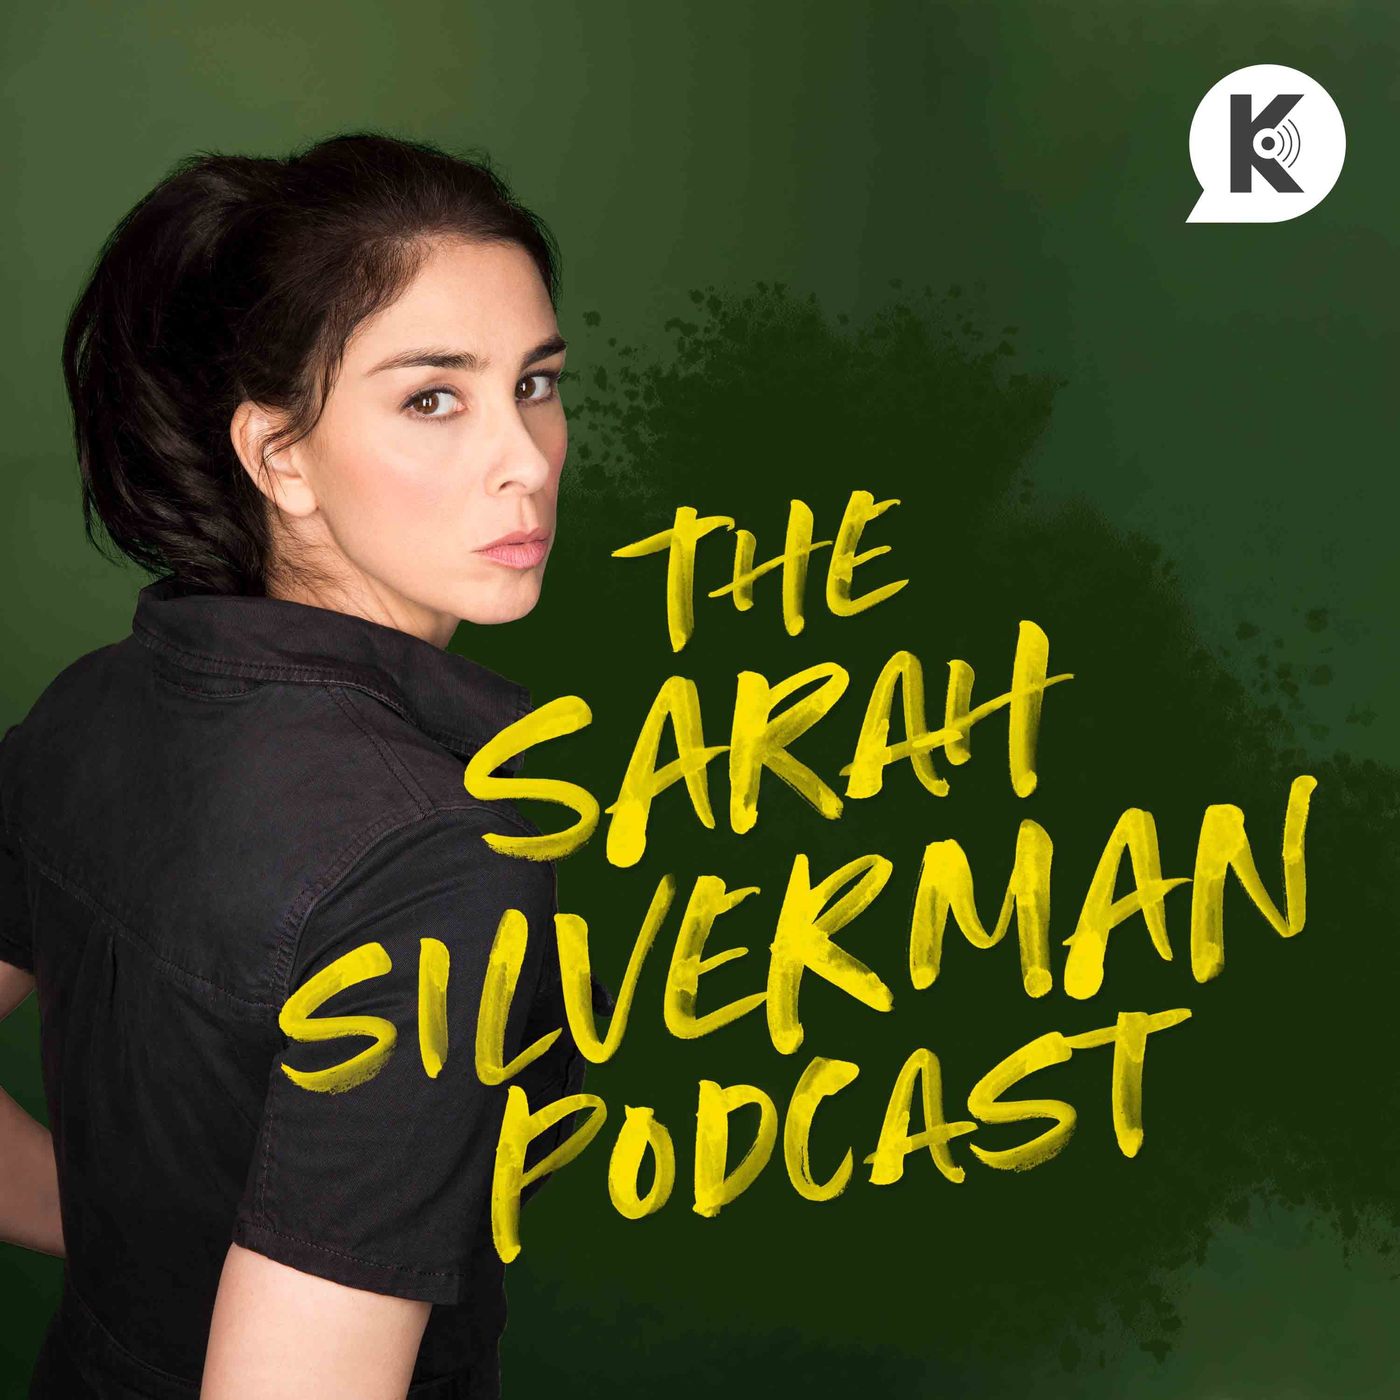 sarah silverman podcast